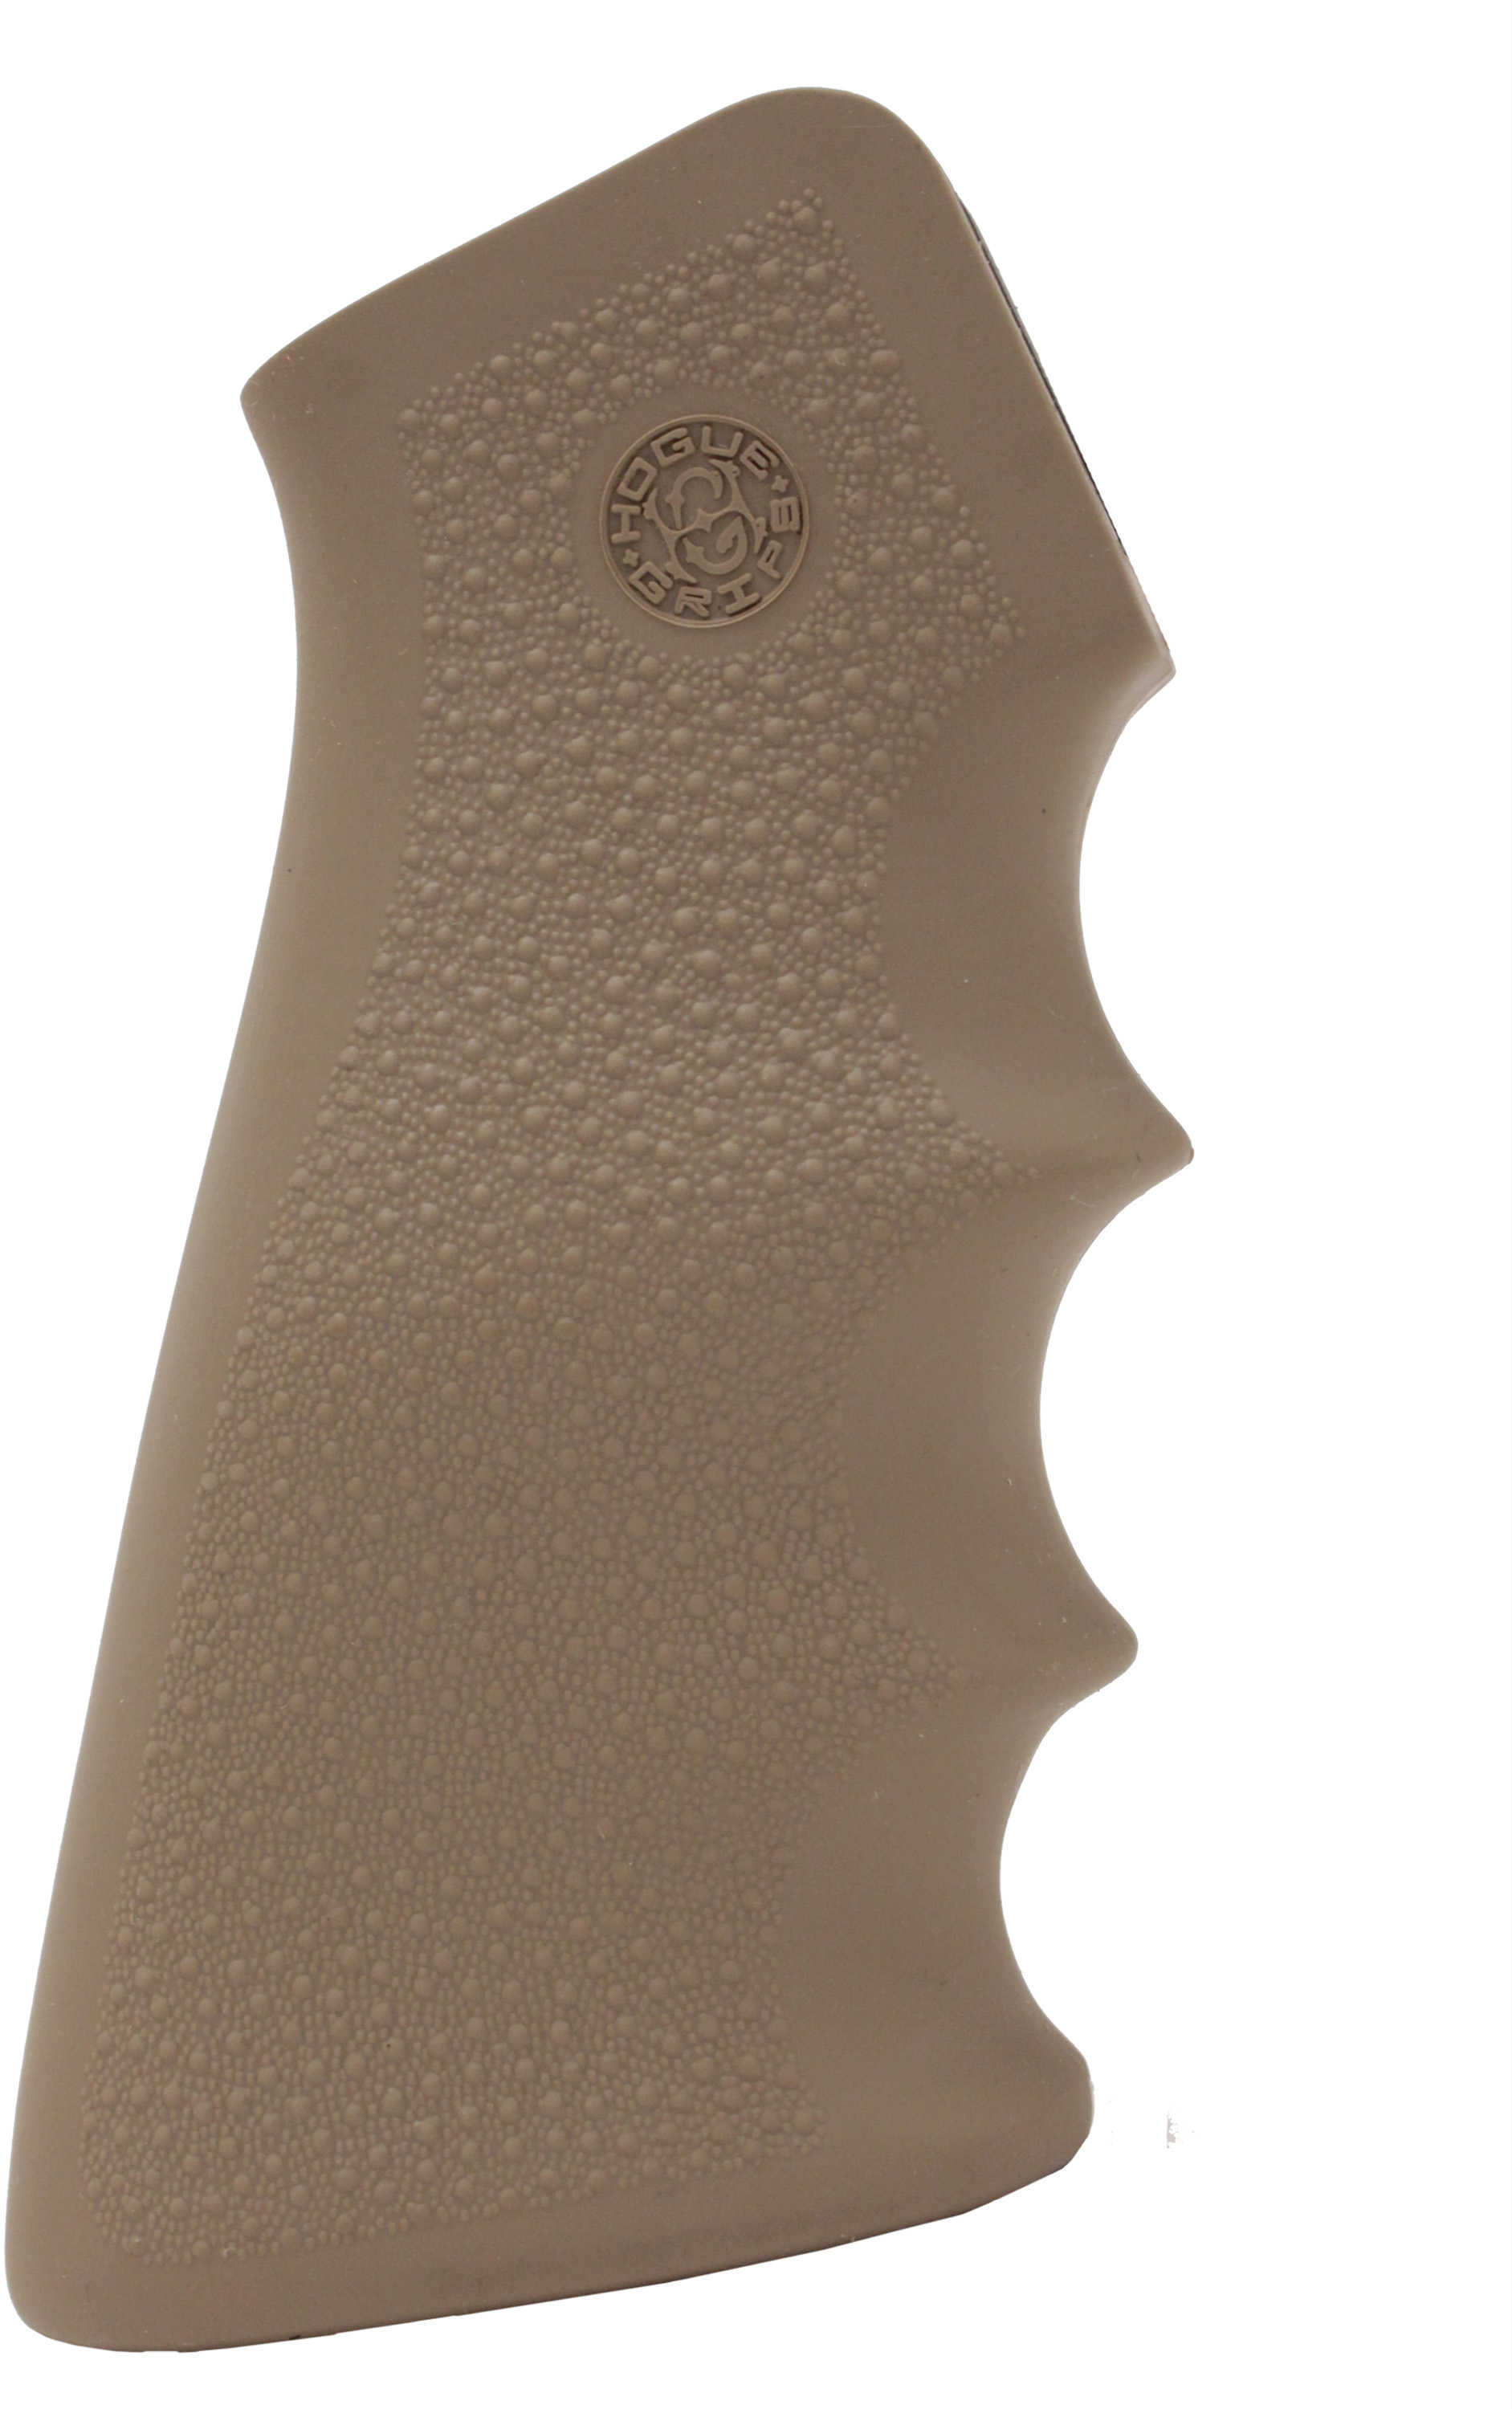 Hogue 15003 AR-15 Overmolded Rubber Grip W/Finger Grooves Matte Desert Tan